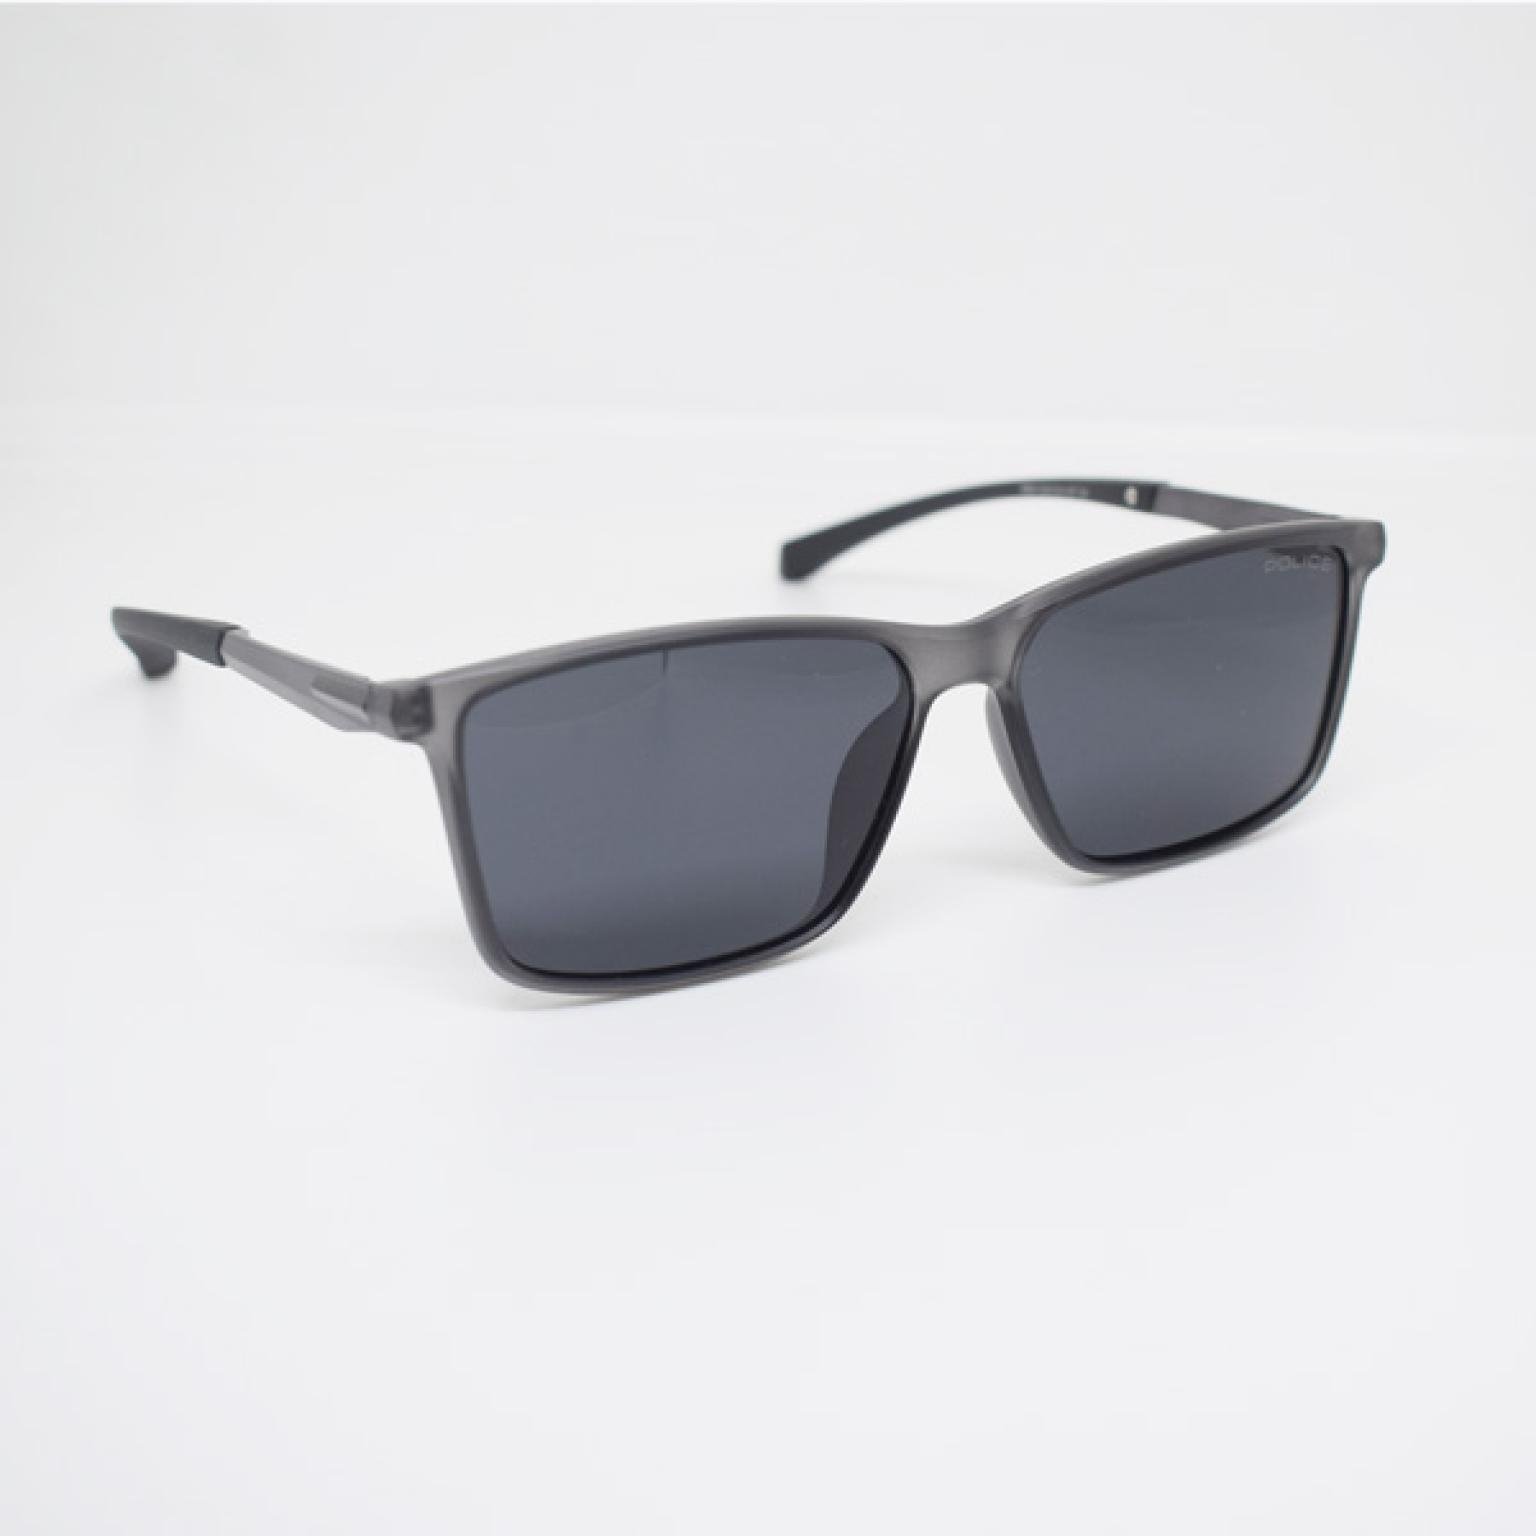 High Quality Polarized Sunglasses For Driving Glass Men women Uv Protection Sunglasses Travel Eyewear UV400 Square frame rectangle shape 